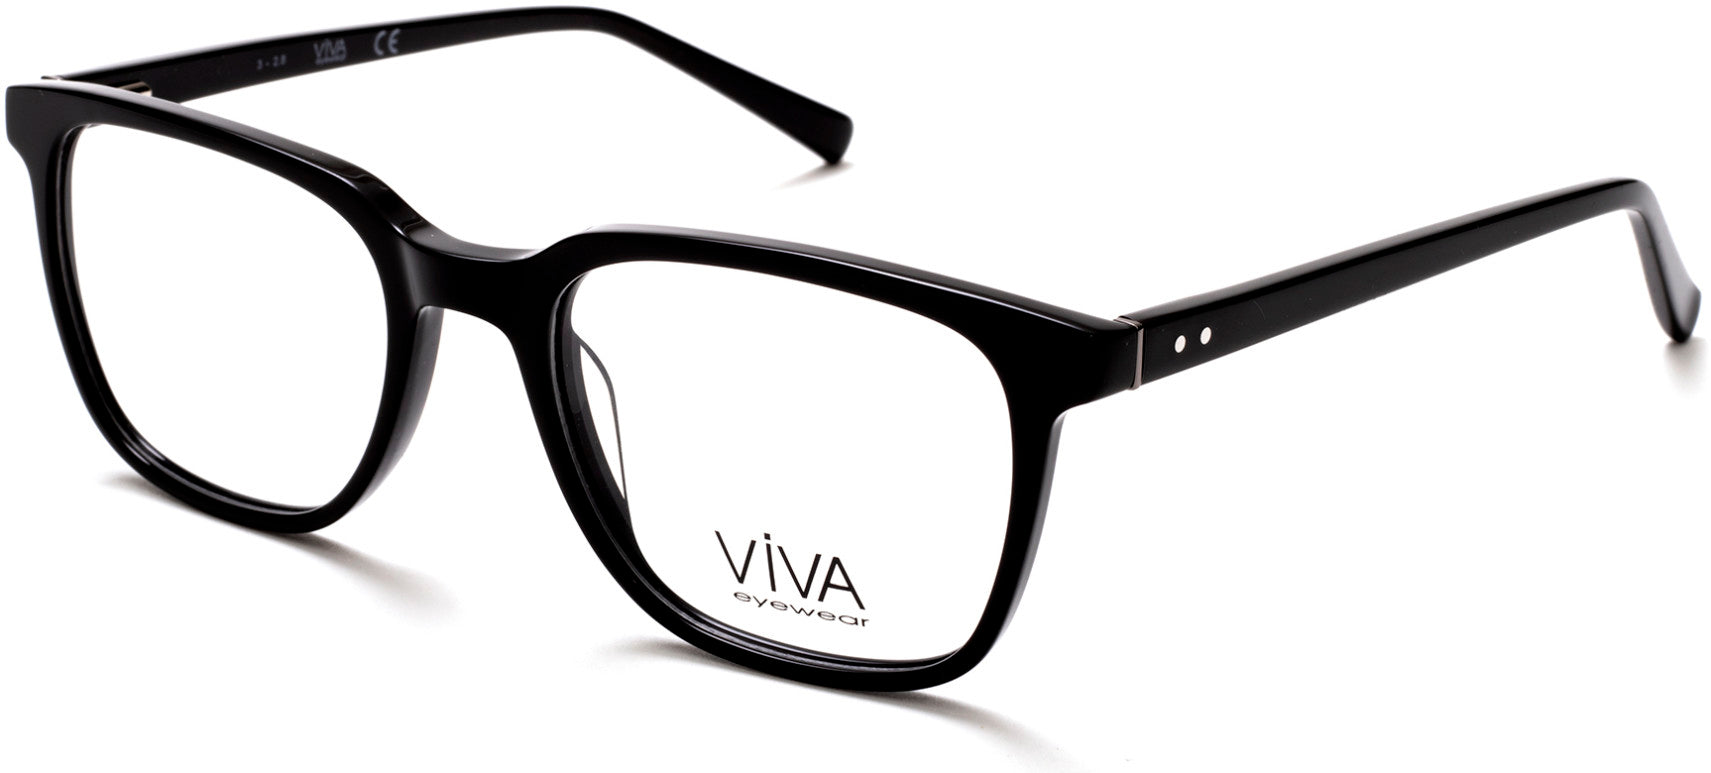 Viva VV4038 Geometric Eyeglasses 001-001 - Shiny Black